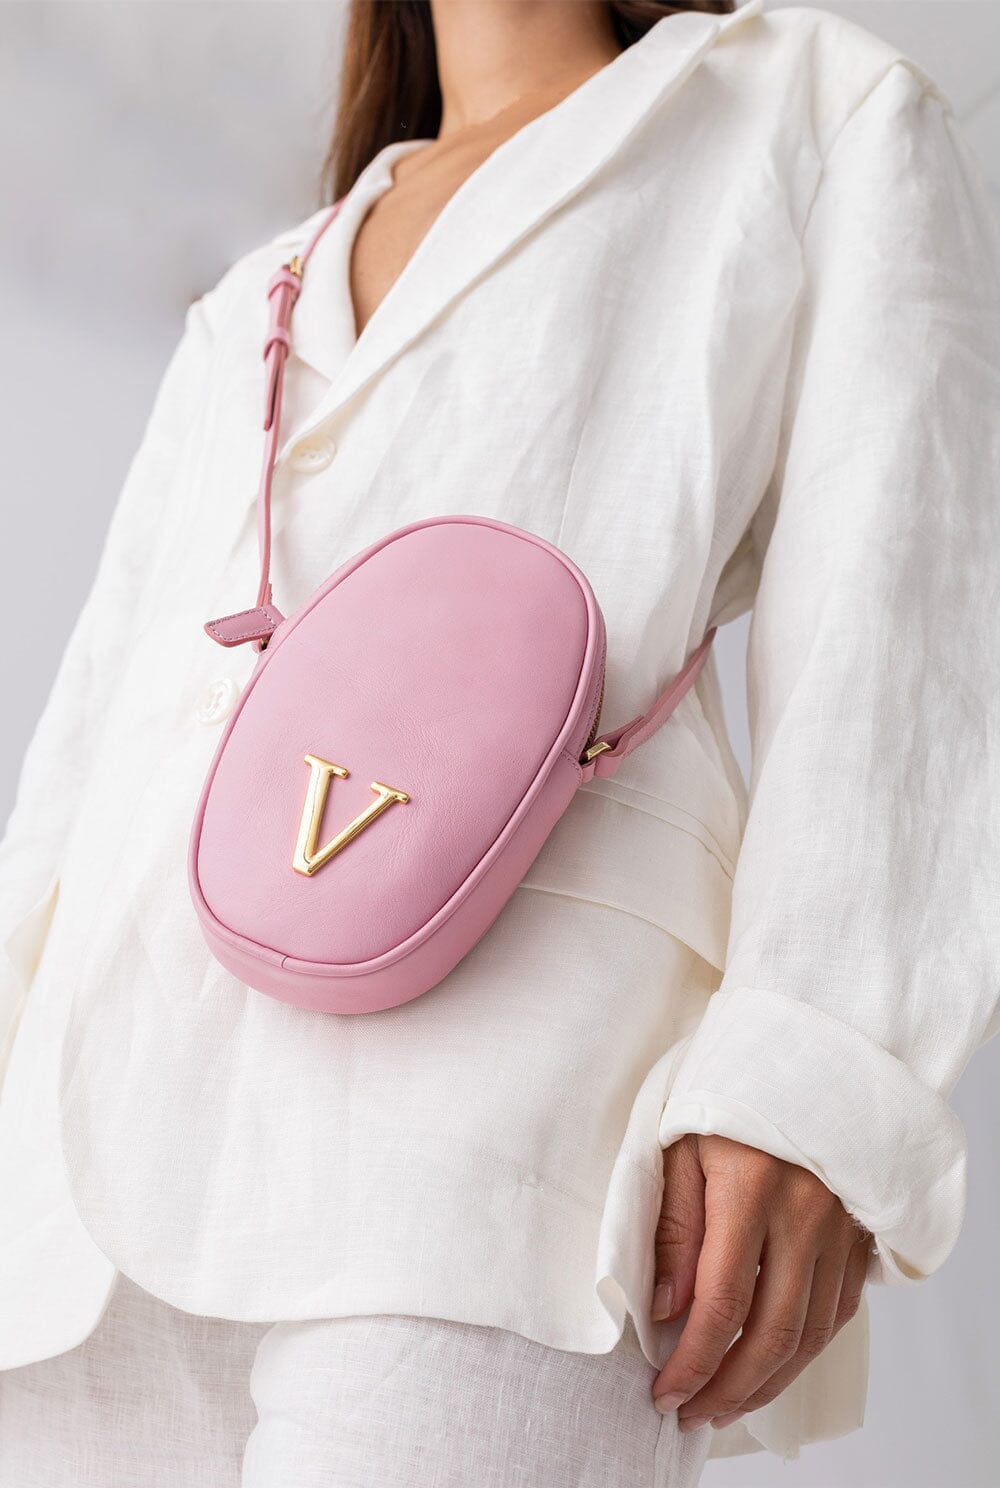 EGG BAG PINK Mini bags The Villã Concept 